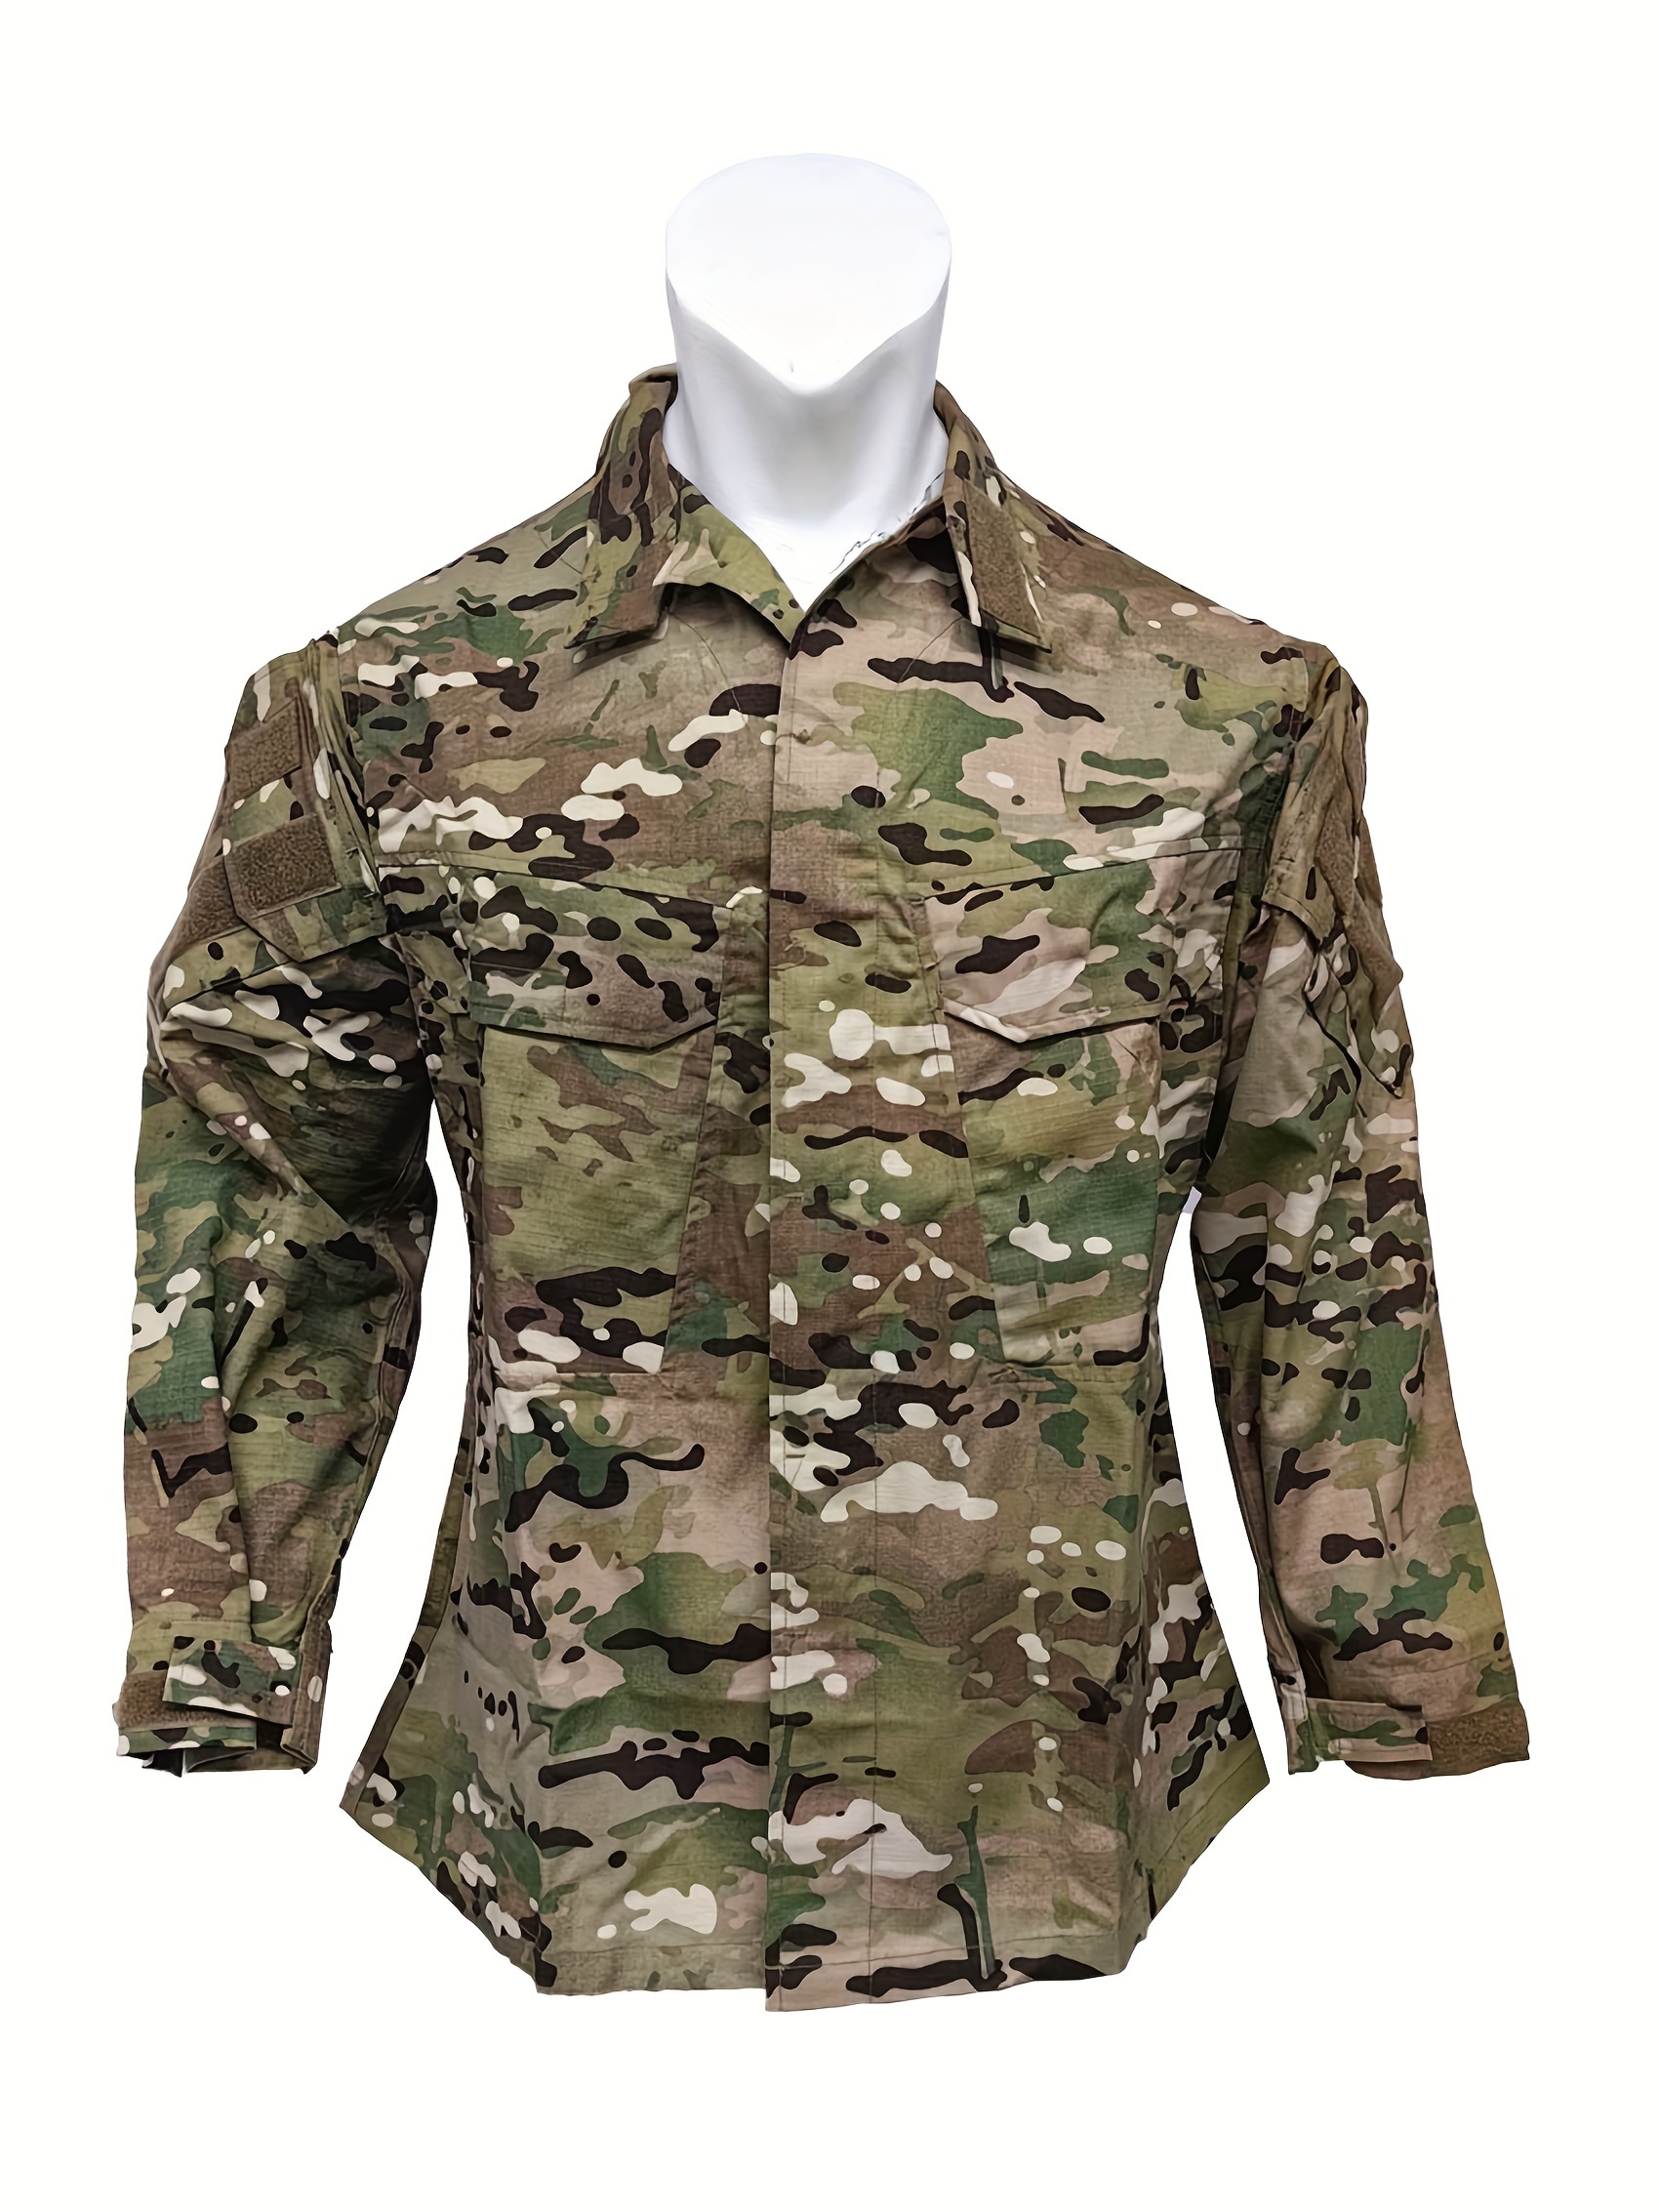 Military Fabric, Digital Desert Camouflage Fabric, Cotton or Fleece